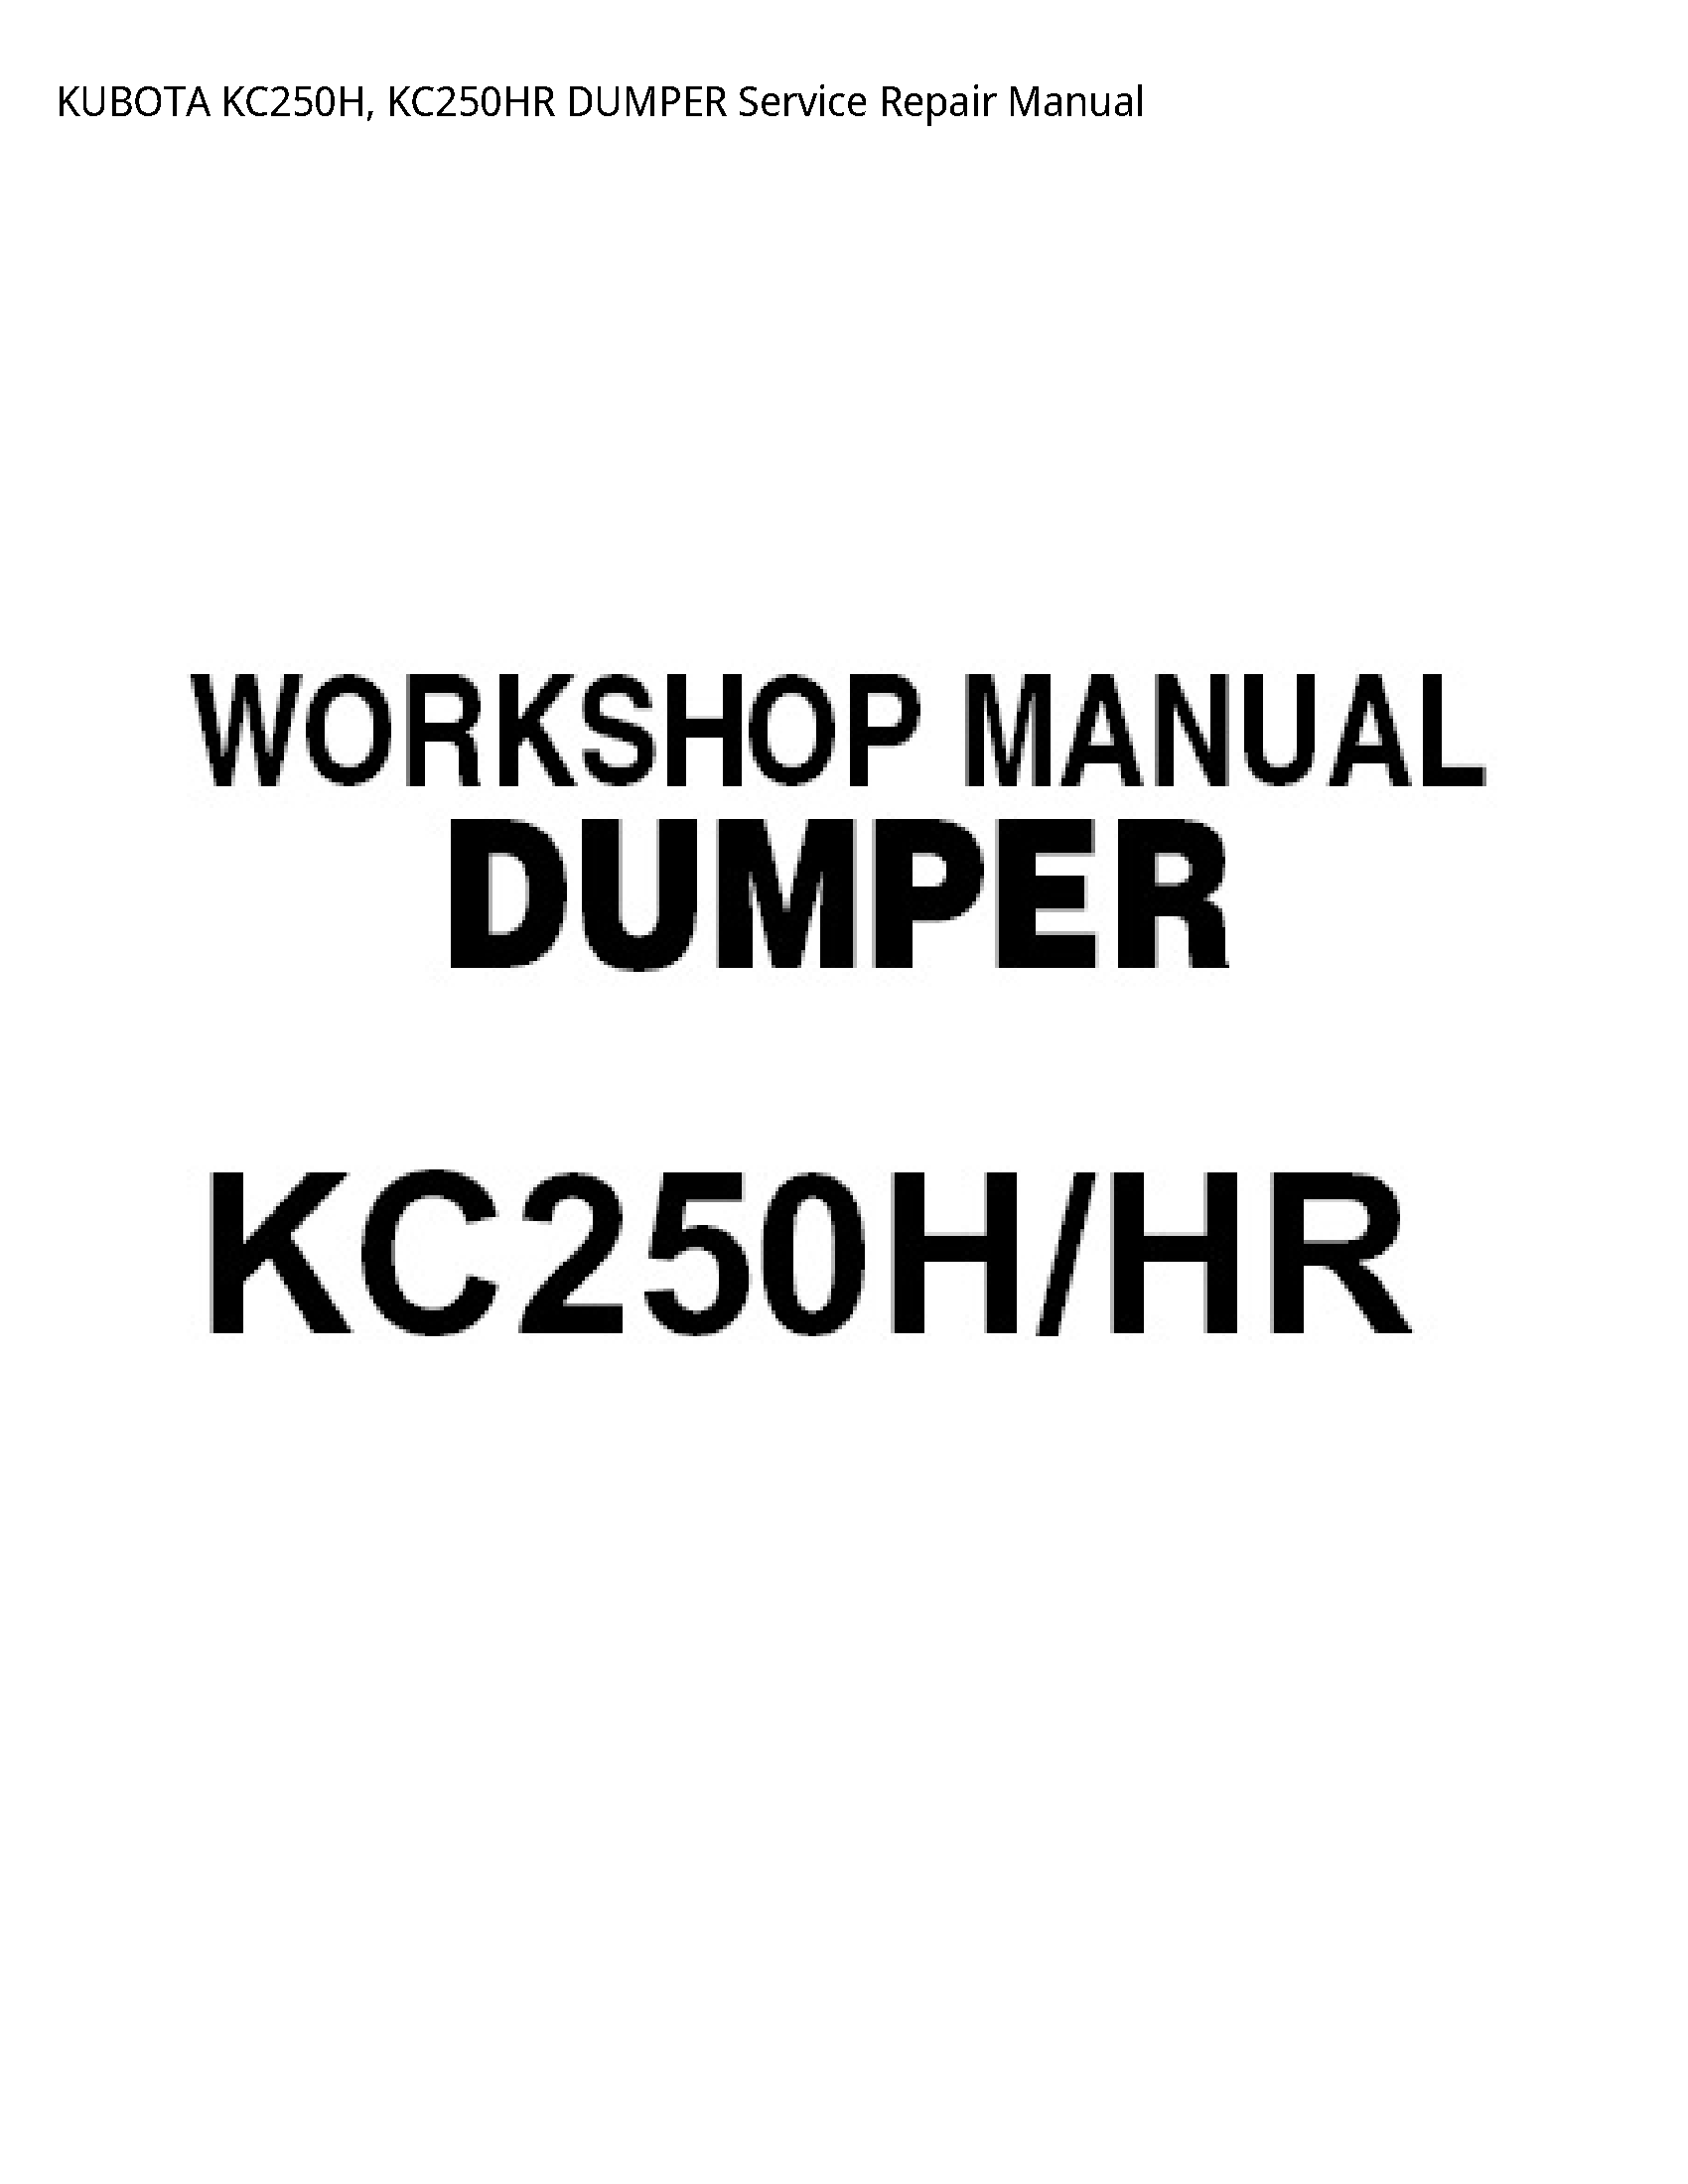 Kubota KC250H DUMPER manual